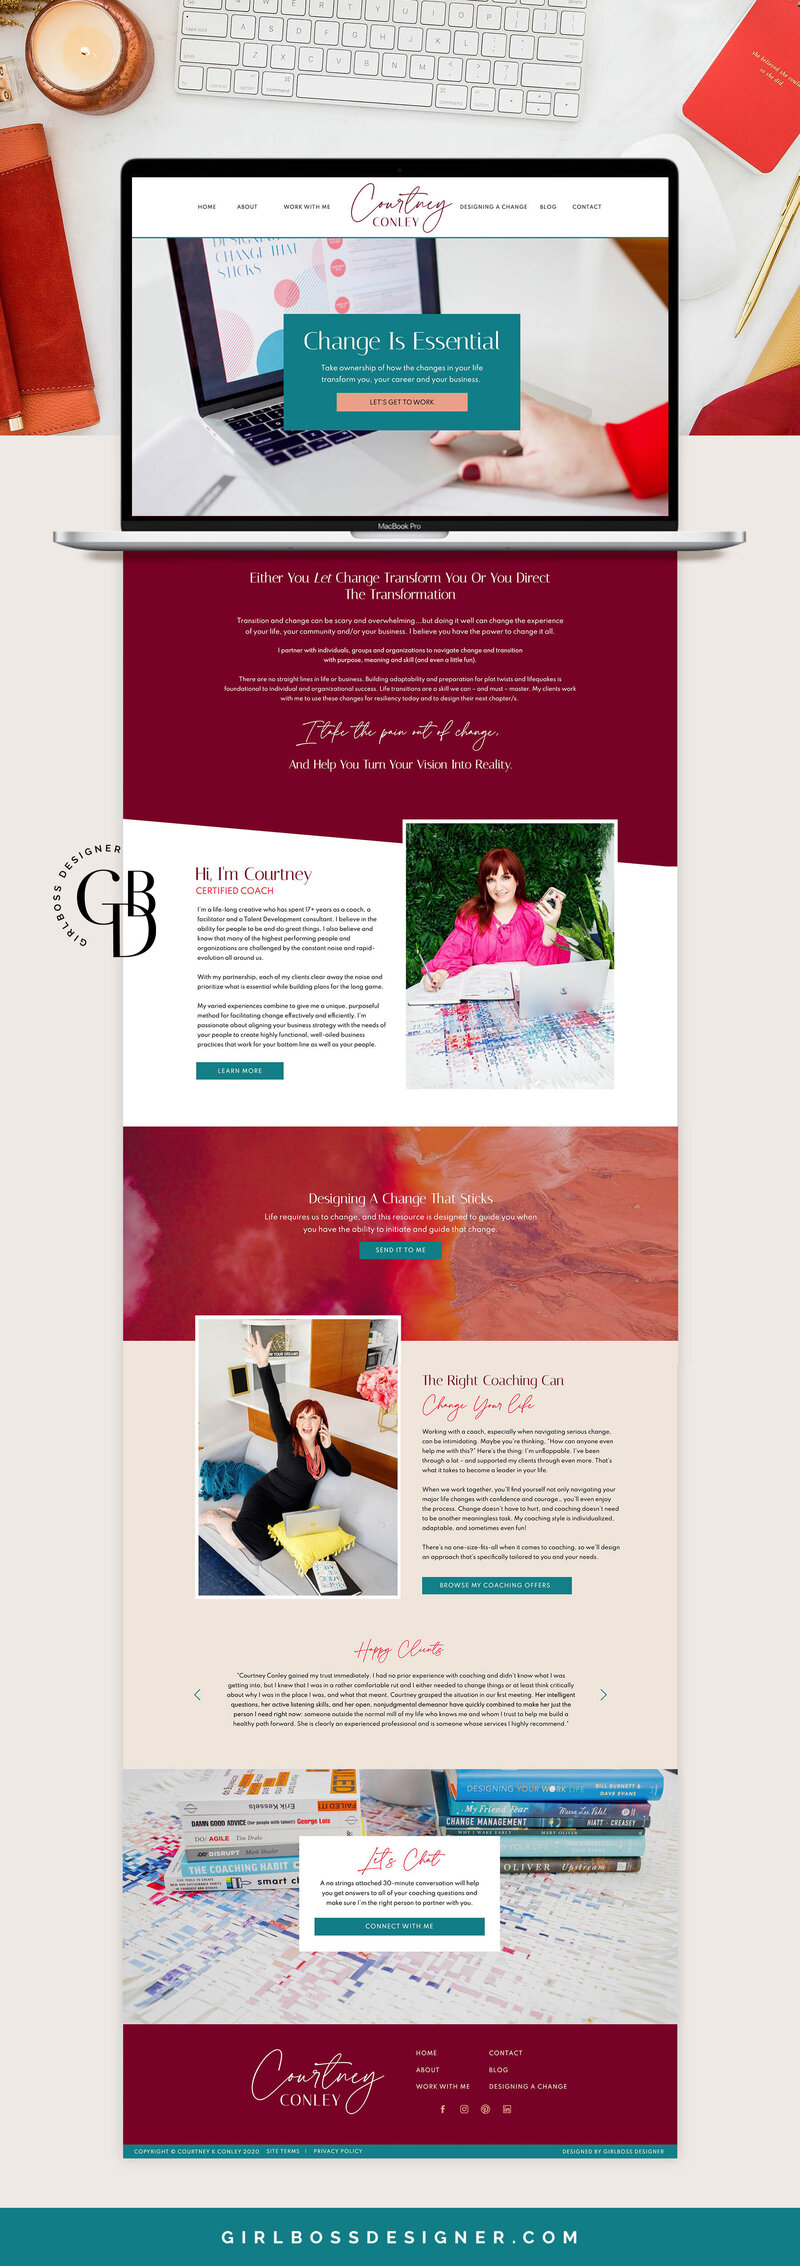 Girlboss-Designer-CourtneyConley-Website-2021